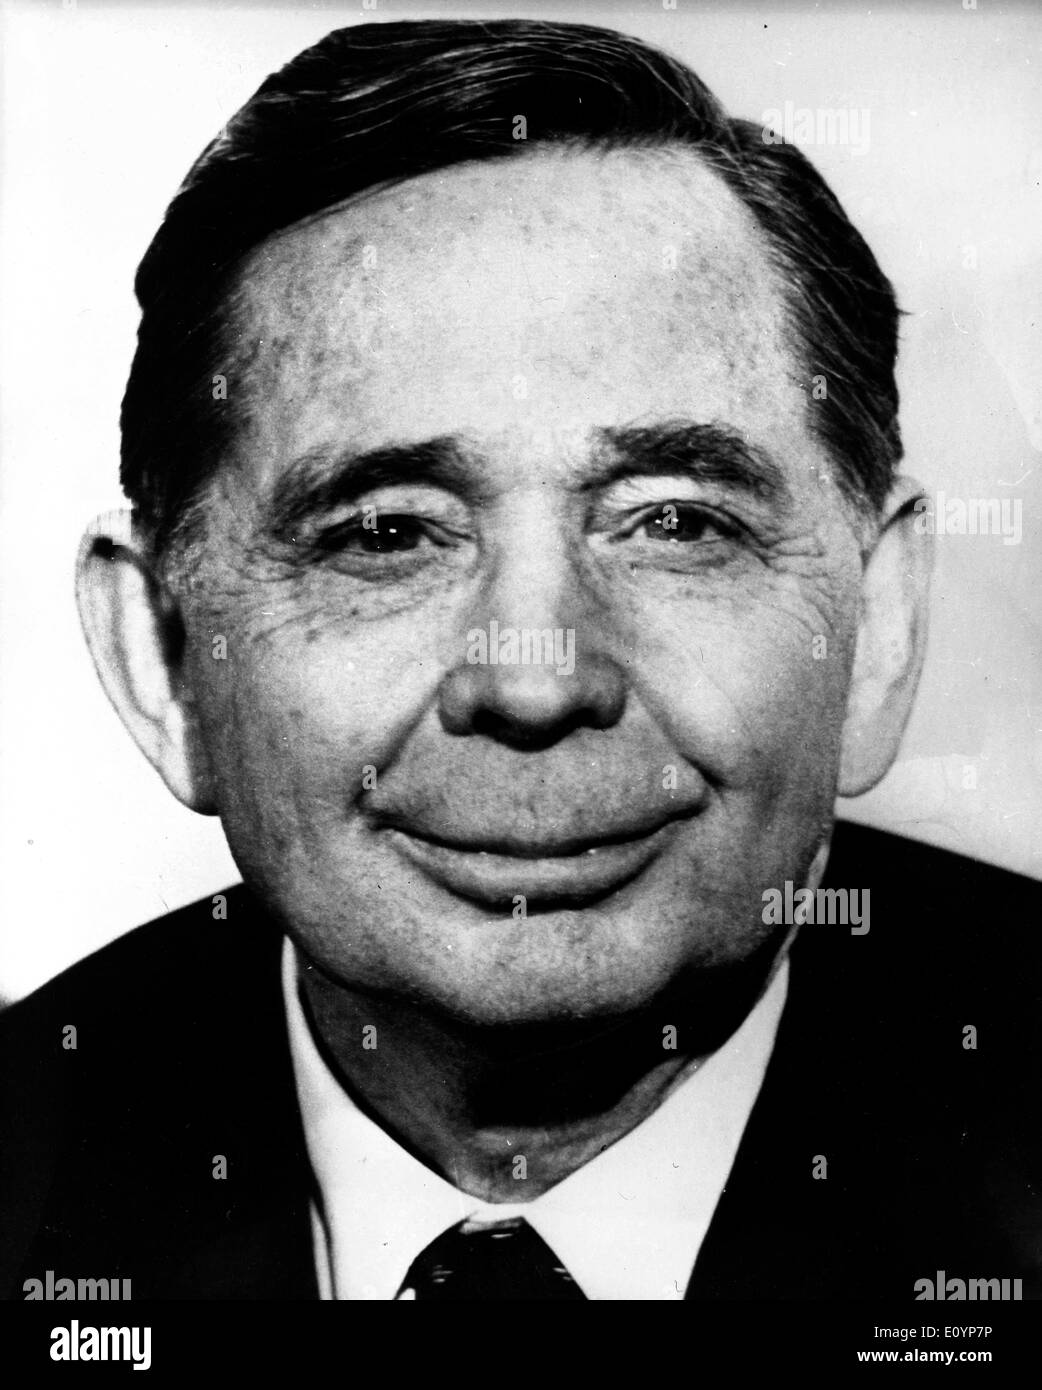 Jan 21, 1971; Washington D.C., USA; Speaker of the House of Representatives of the 92nd Congress, Mr. CARL ALBERT. Stock Photo